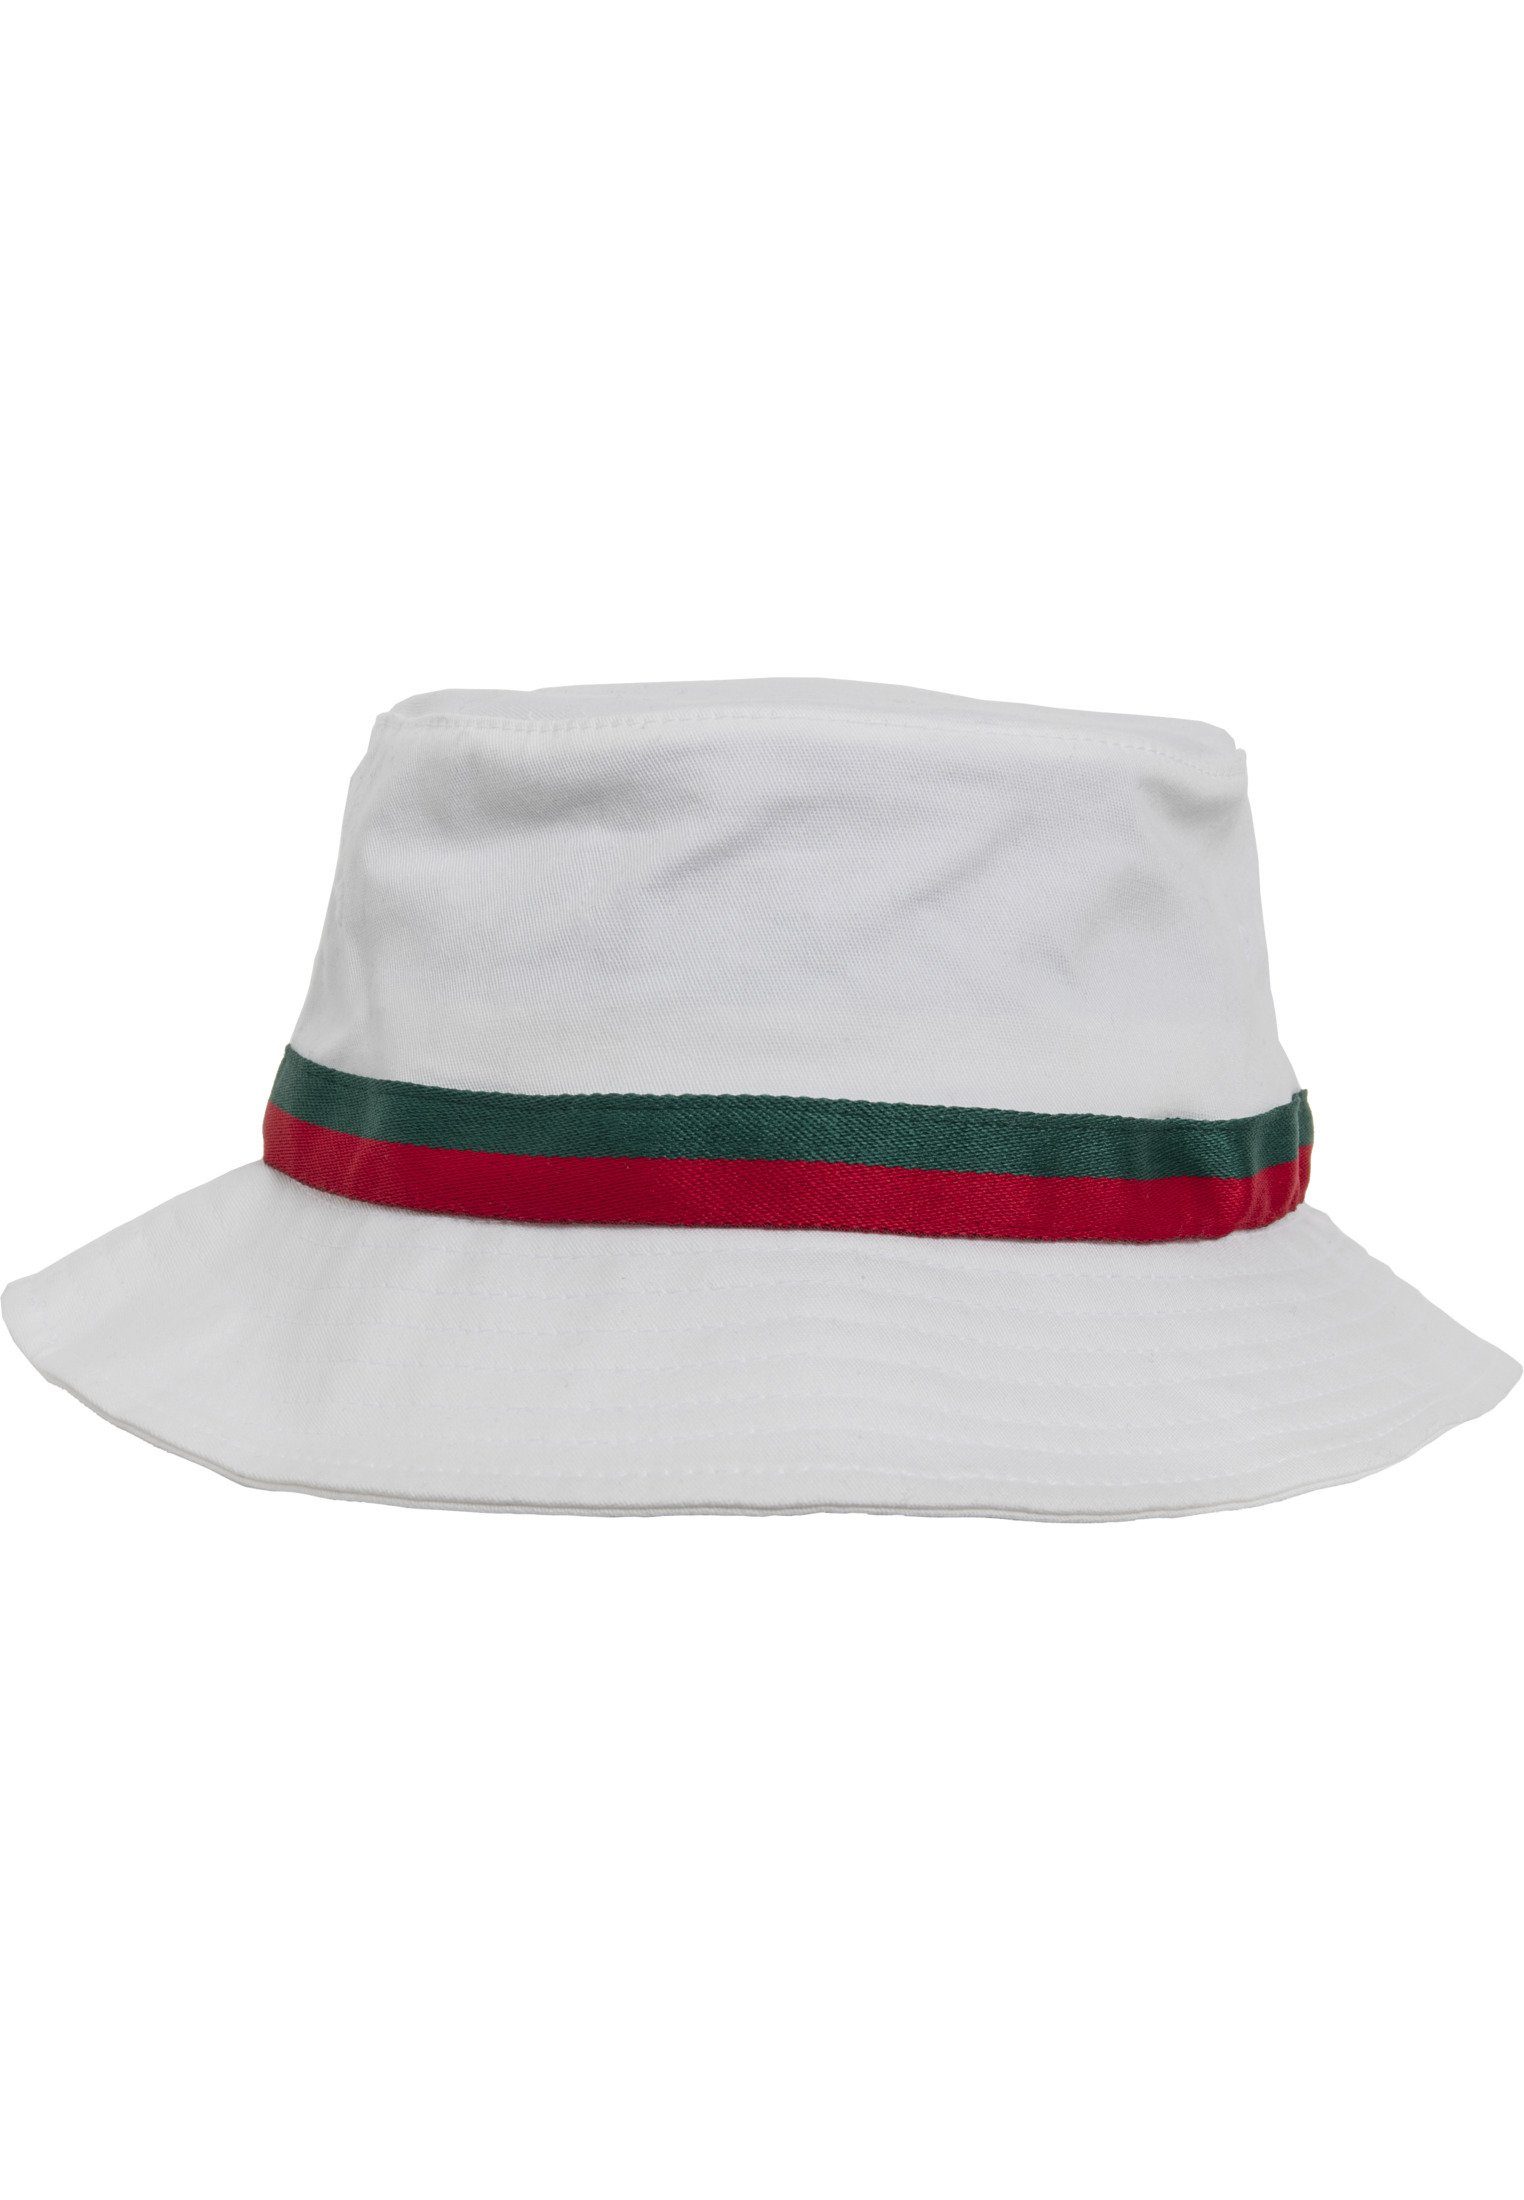 Bucket Hat Cap white/firered/green Flex Bucket Flexfit Hat Stripe